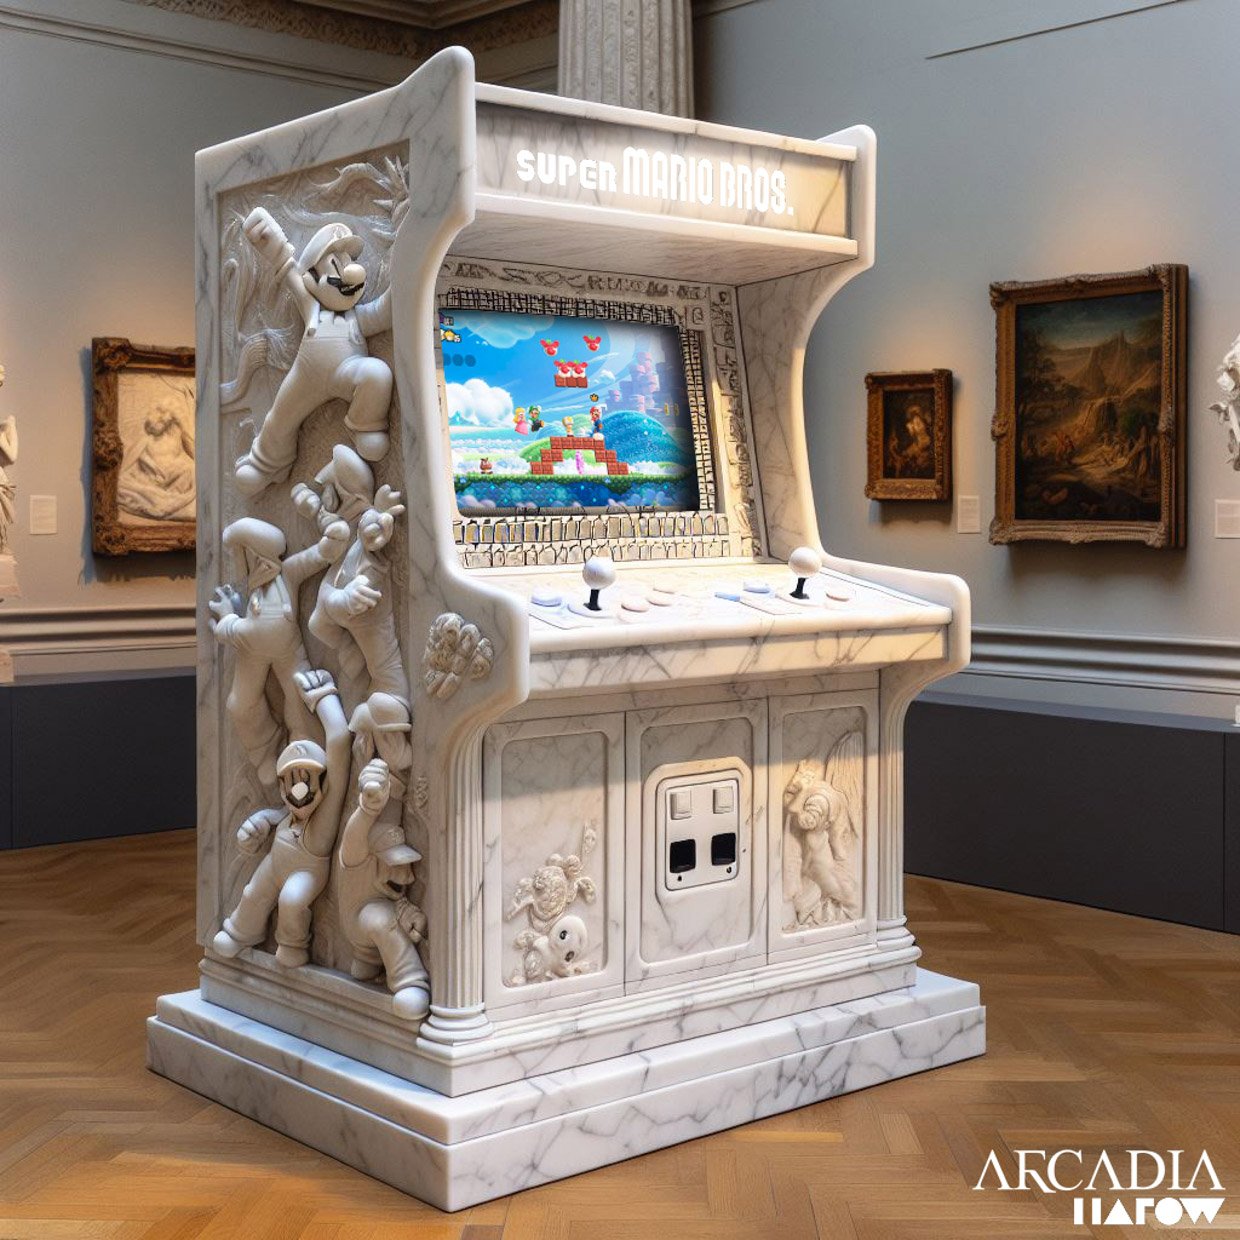 Arcadia Marble Arcade Machine